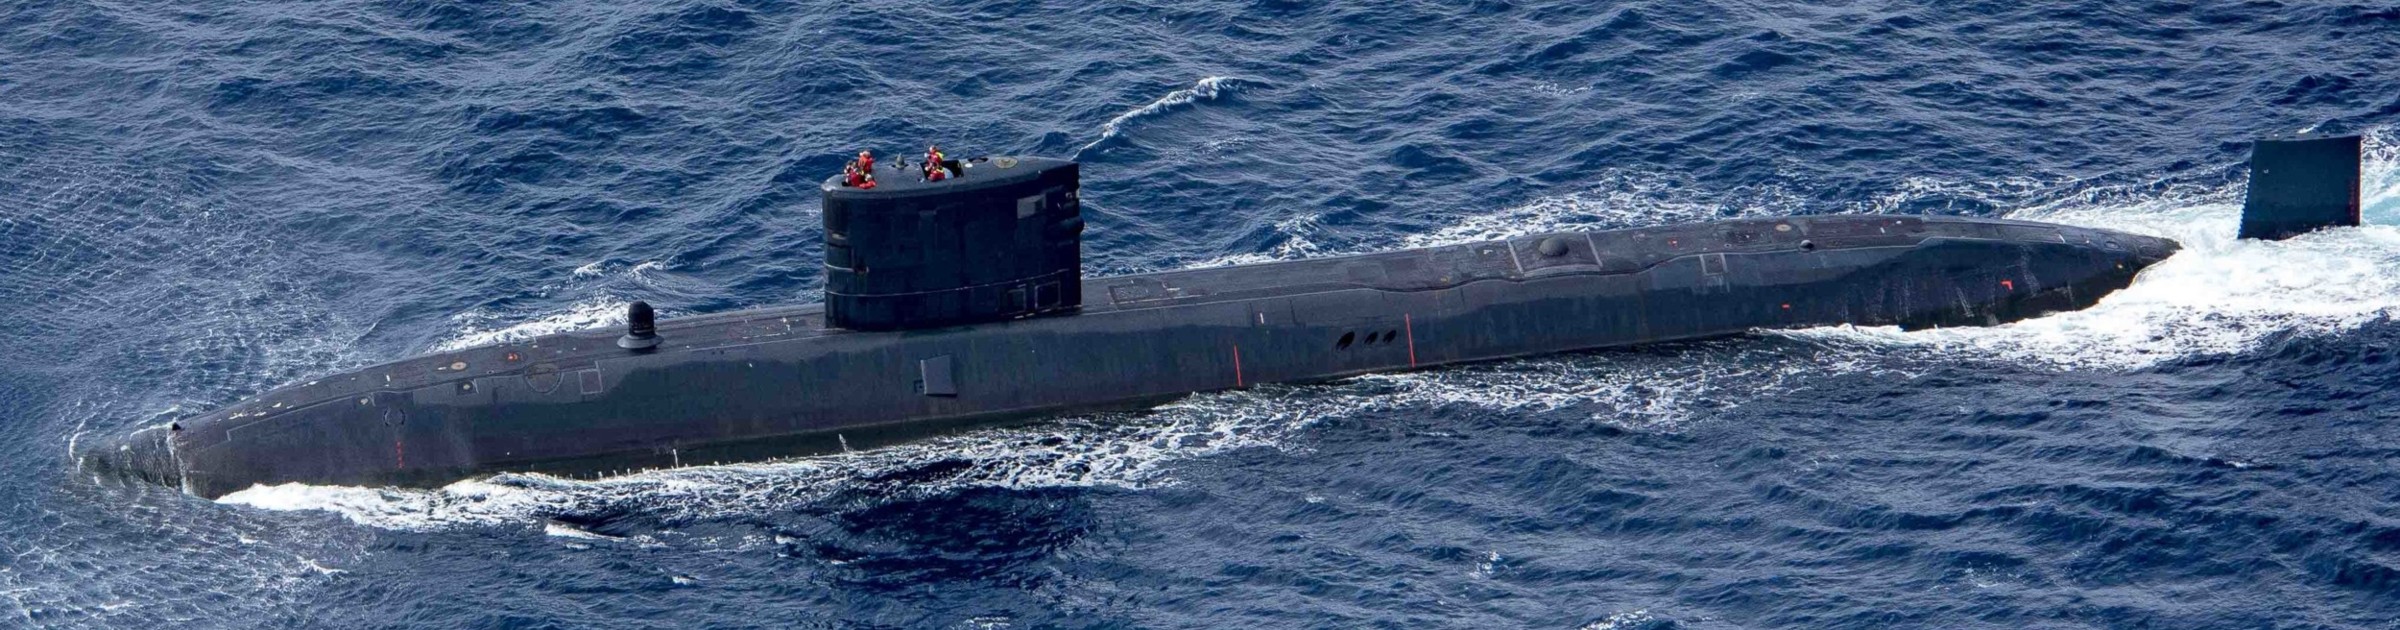 s91 hms trenchant trafalgar class attack submarine hunter killer royal navy 06